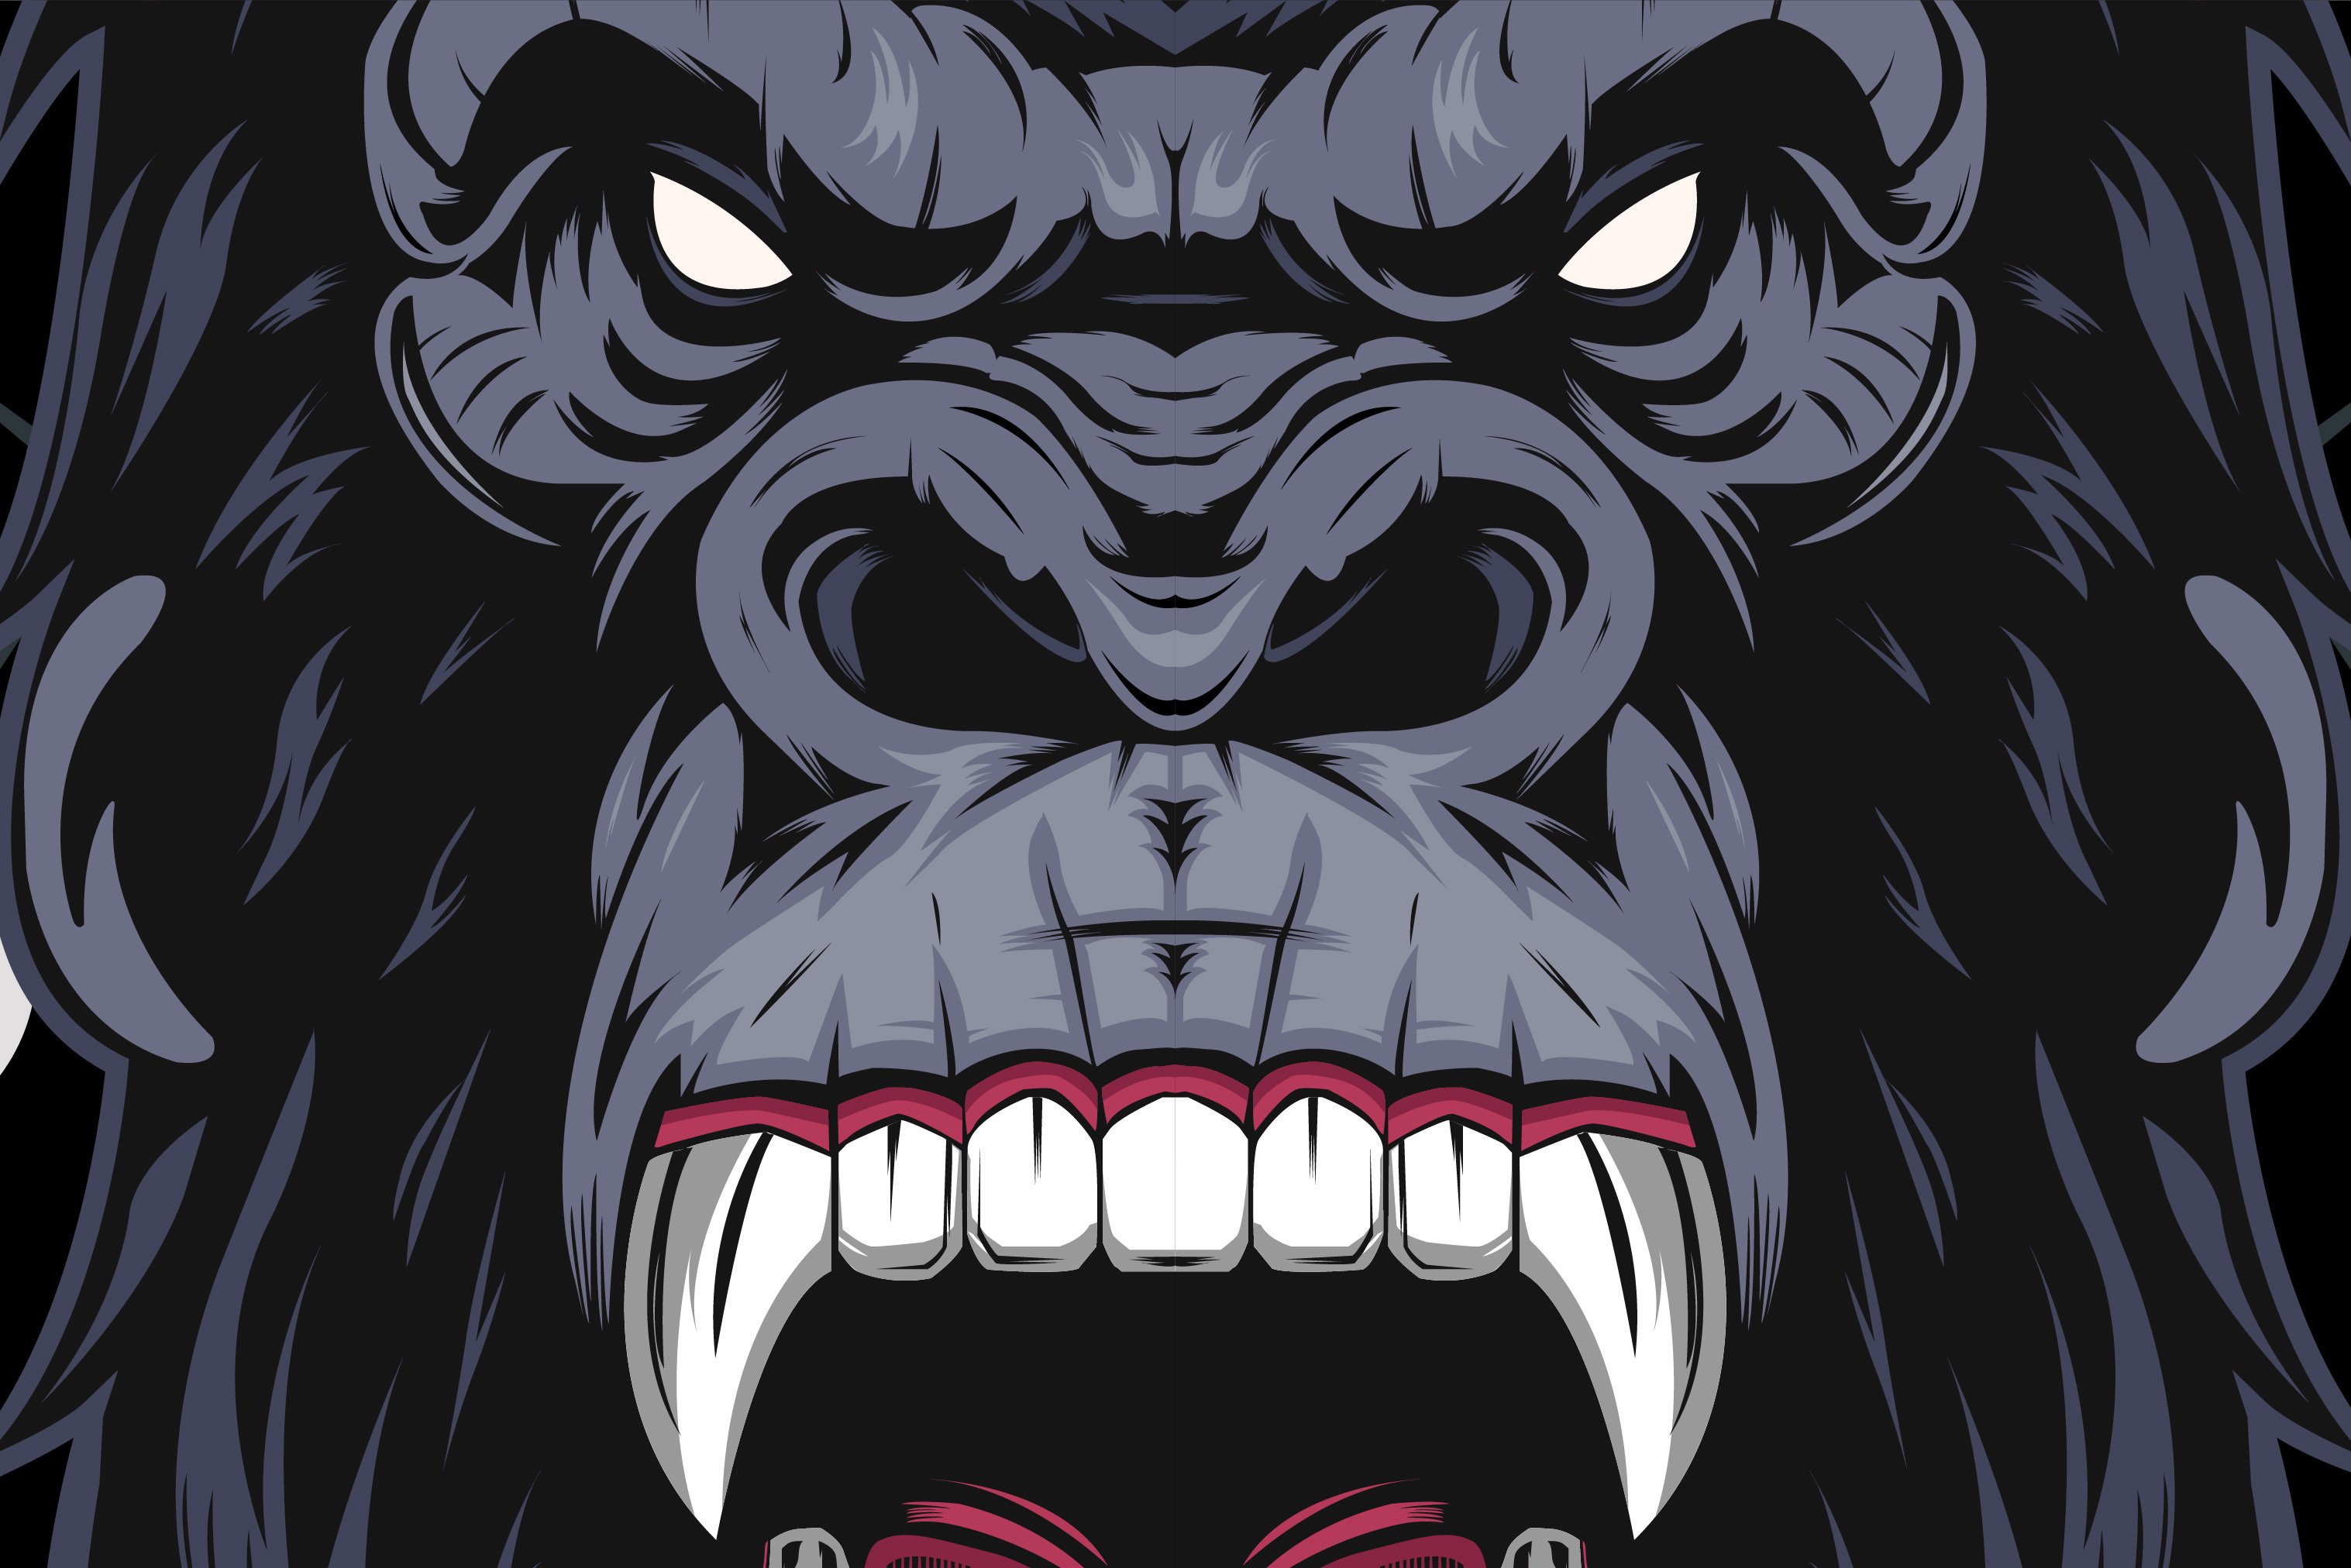 King Kong - Ferocious the gorilla preview image.